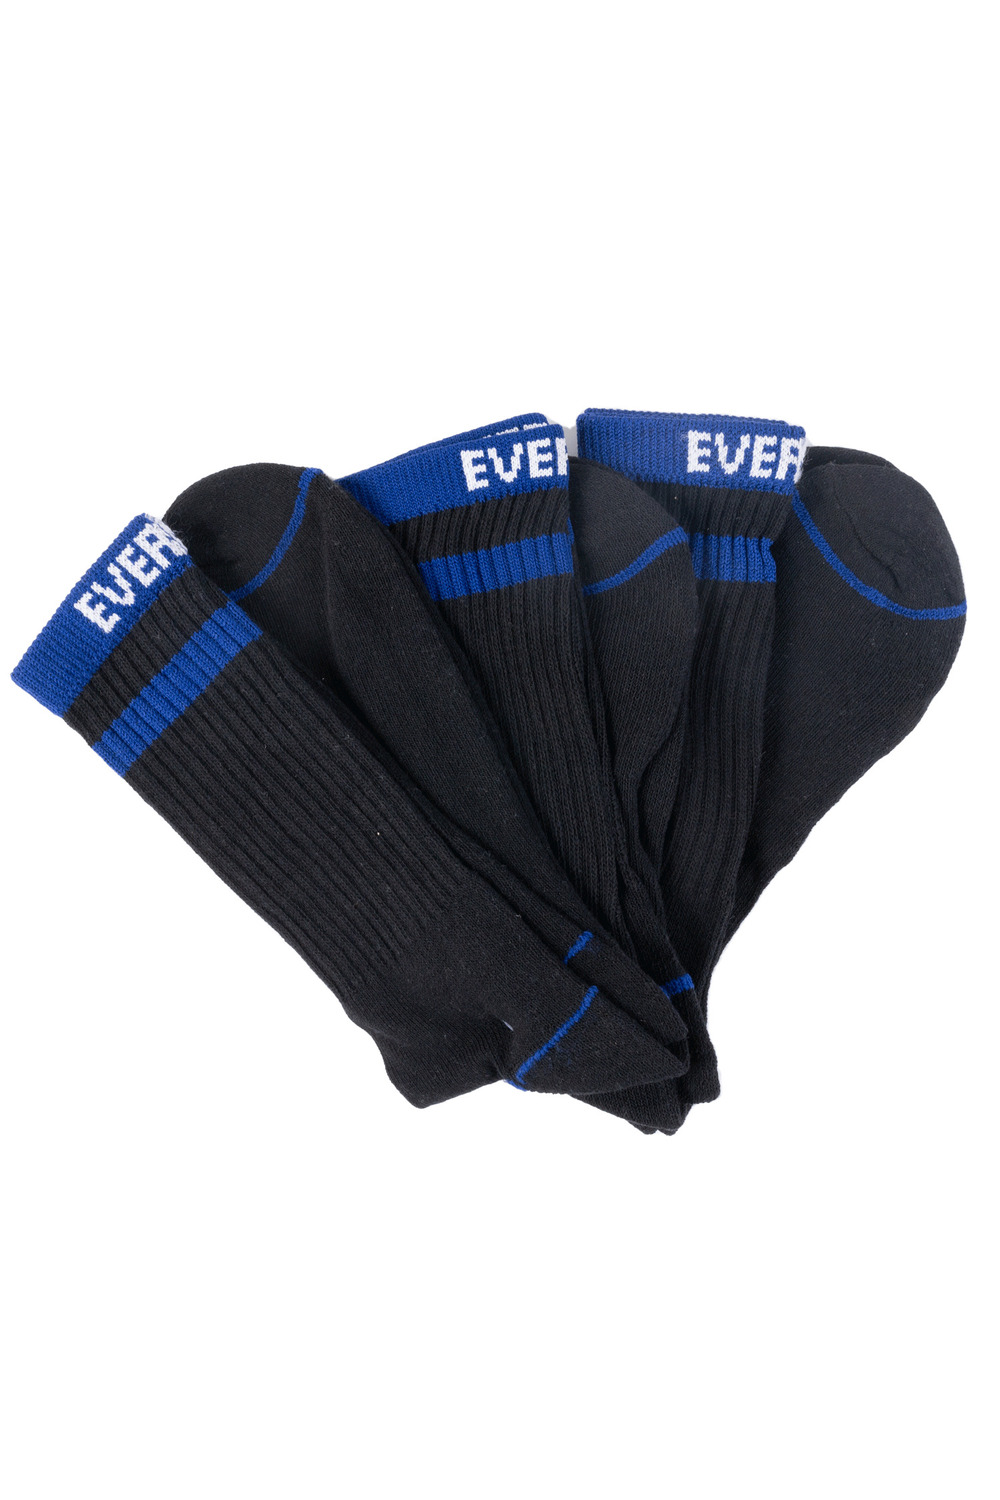 Everlast - Men's crew sport socks, 3 pairs. Colour: black